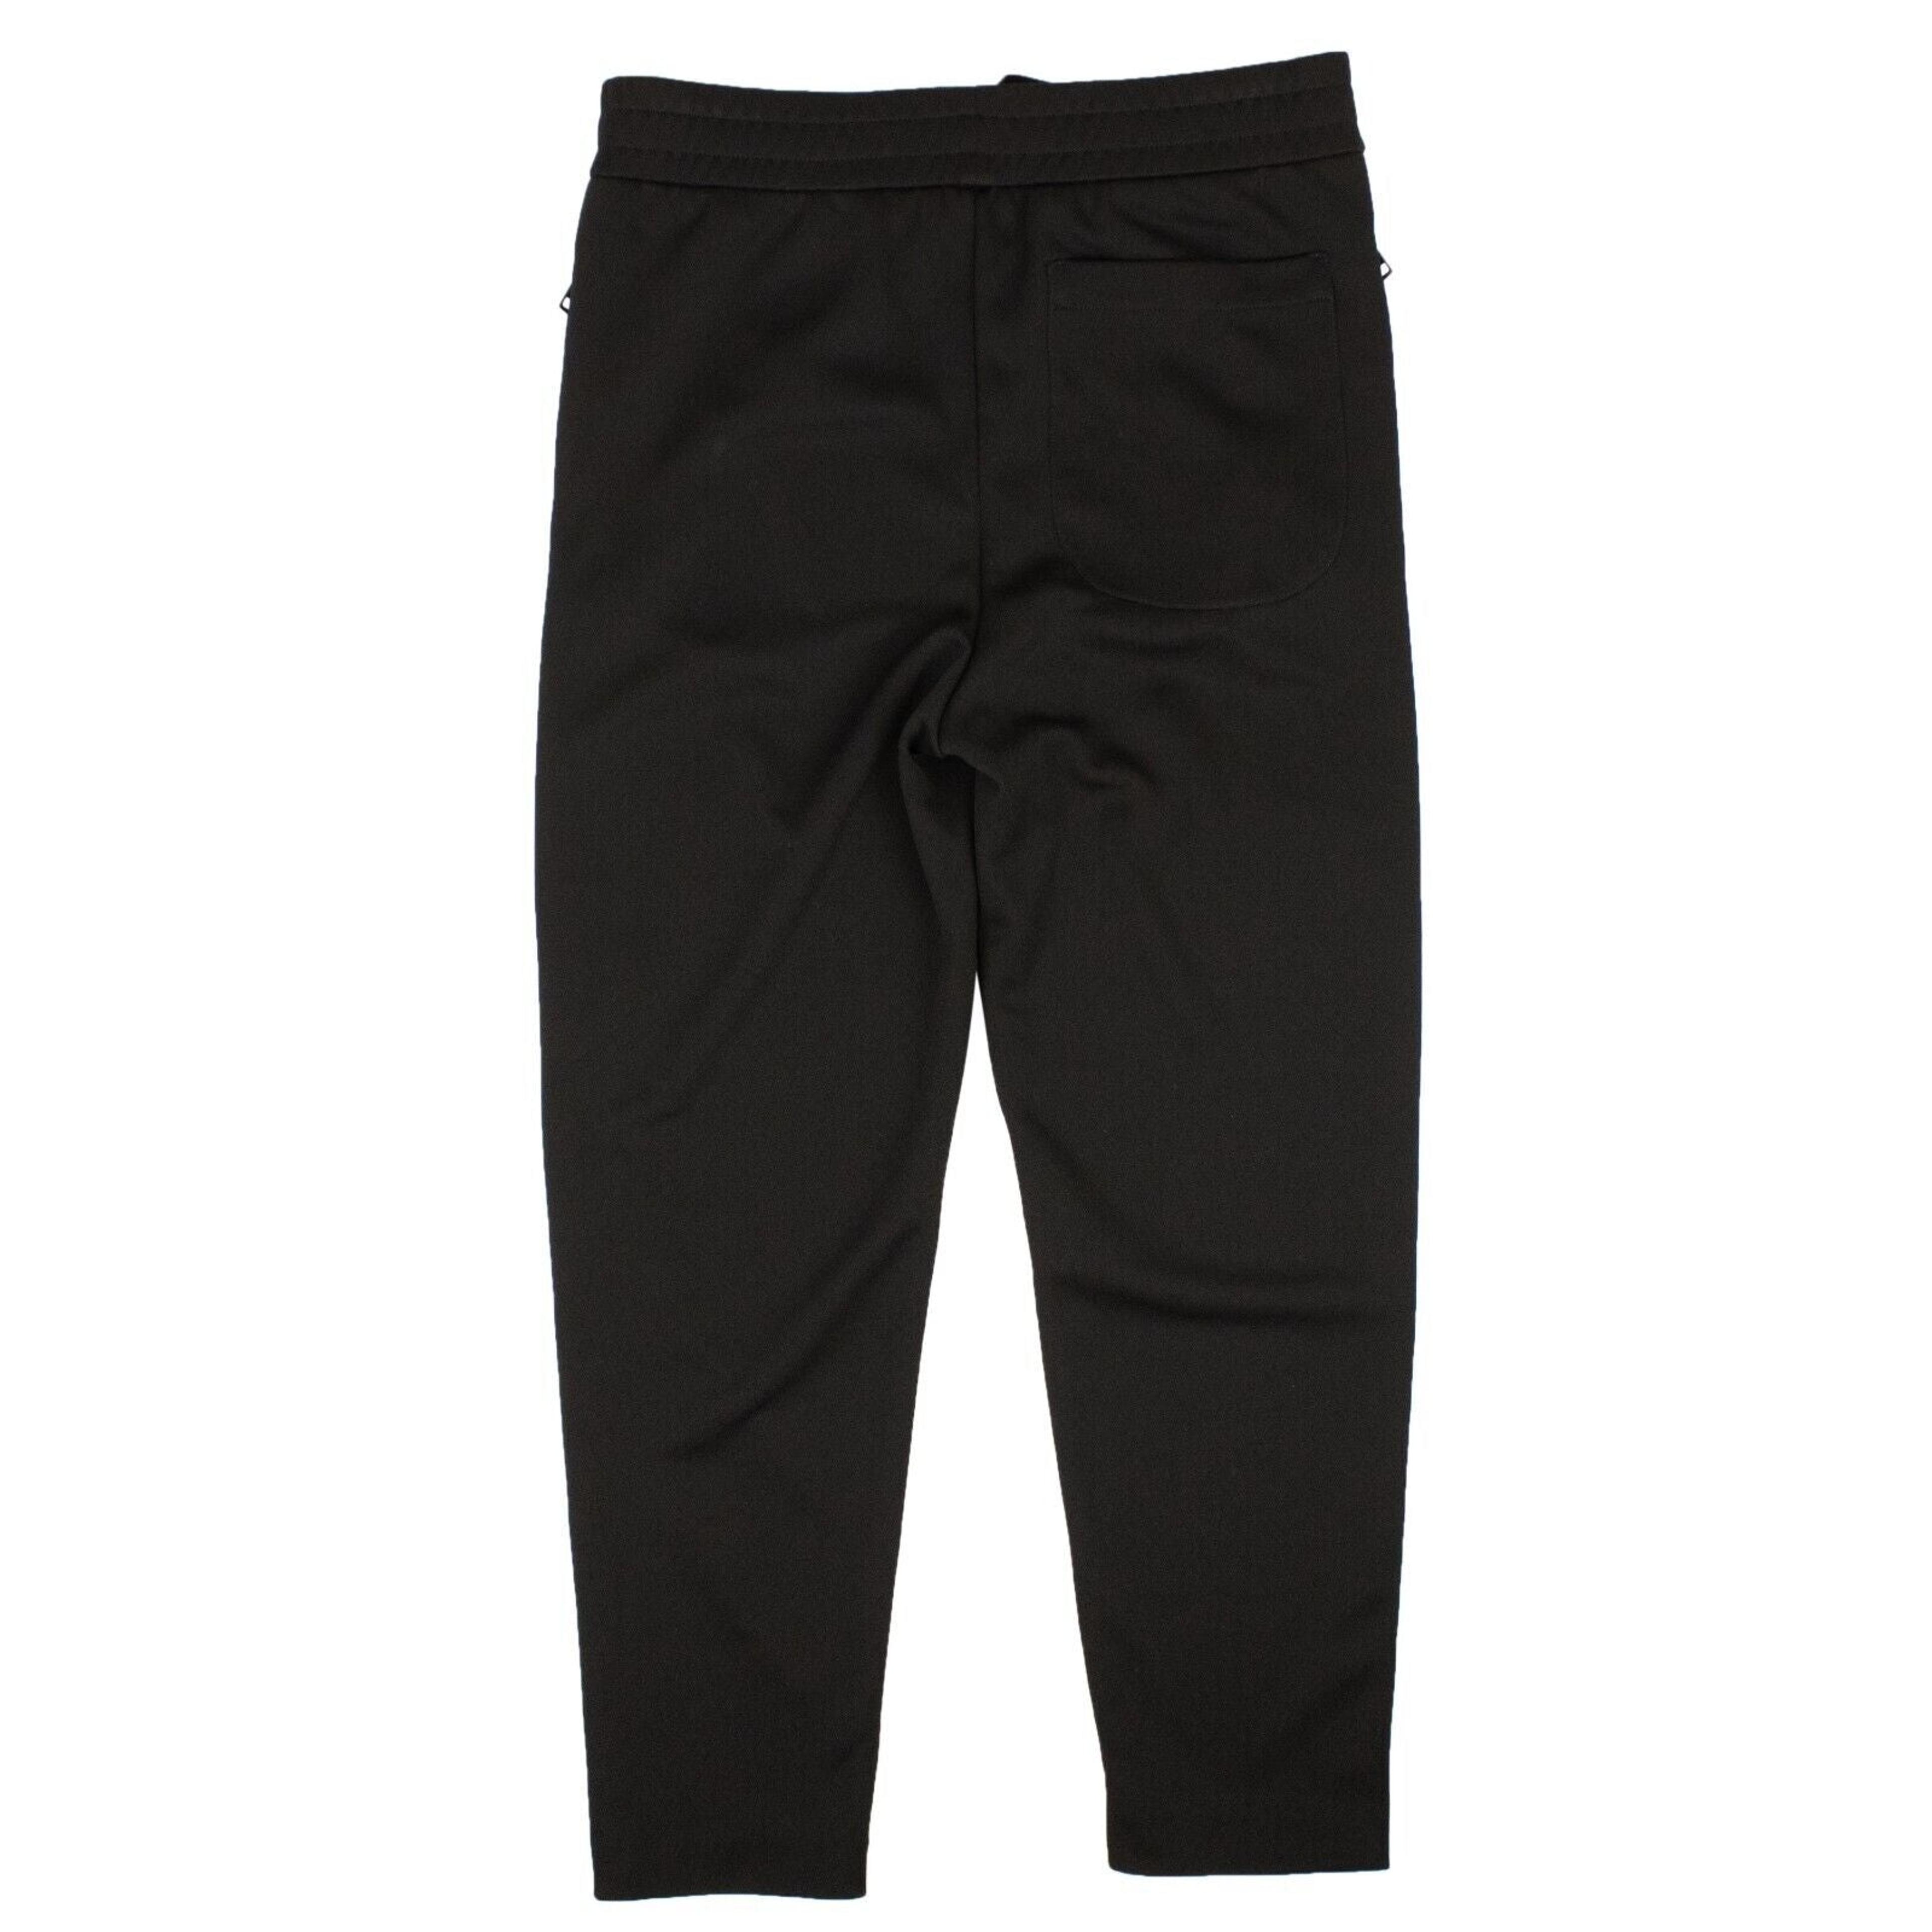 Alternate View 2 of Black Cotton Studded Detail Sweatpants